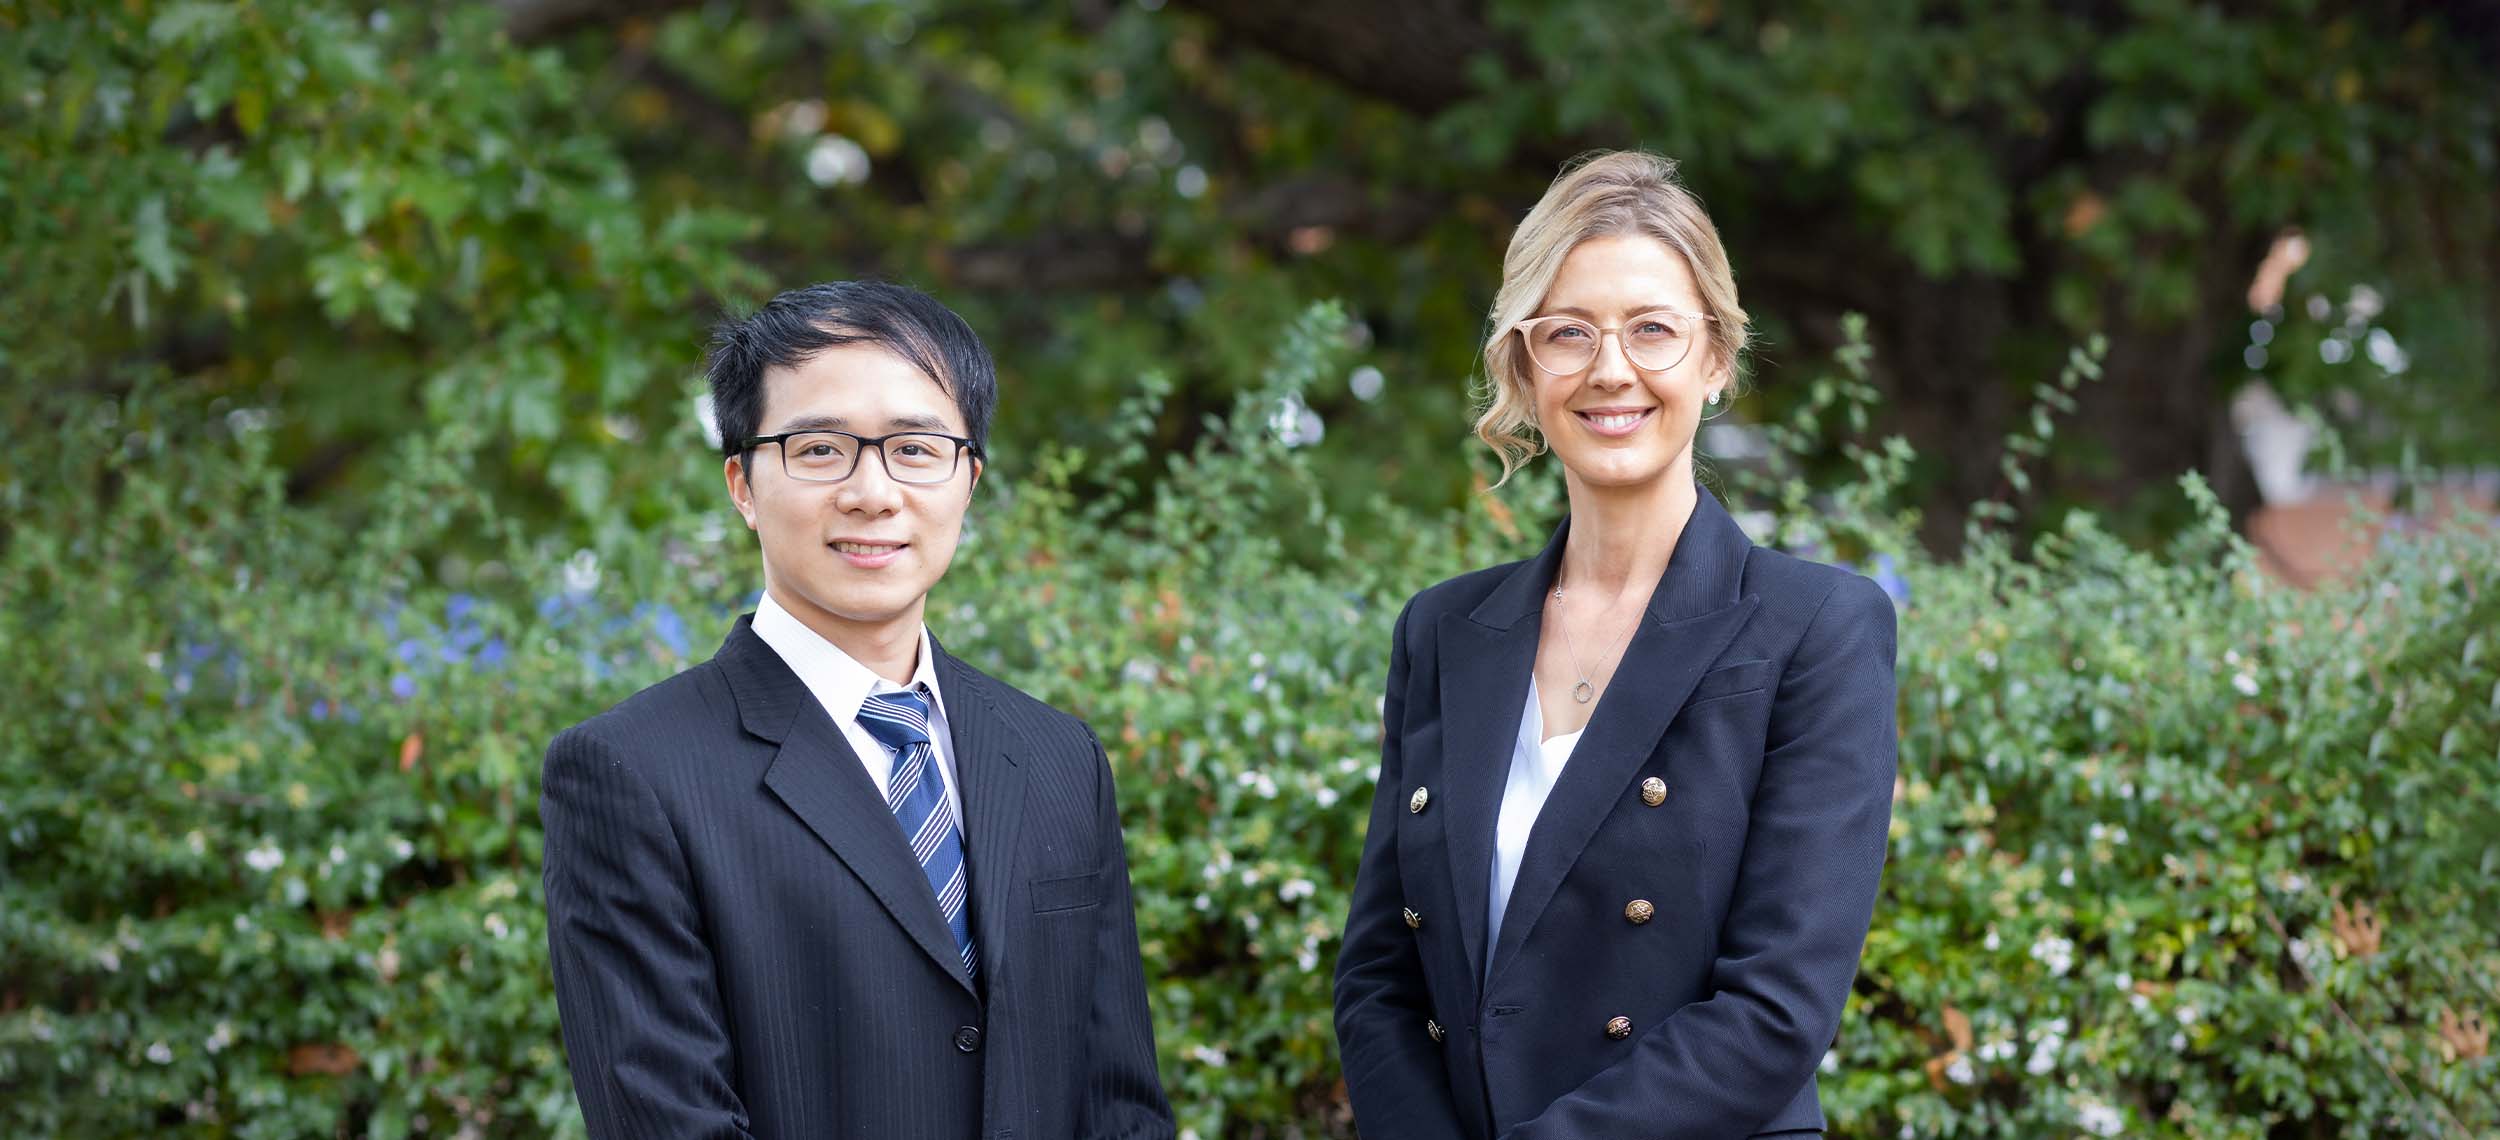 Dr Stanley Choi and Dr Anna von Reibnitz standing side by side